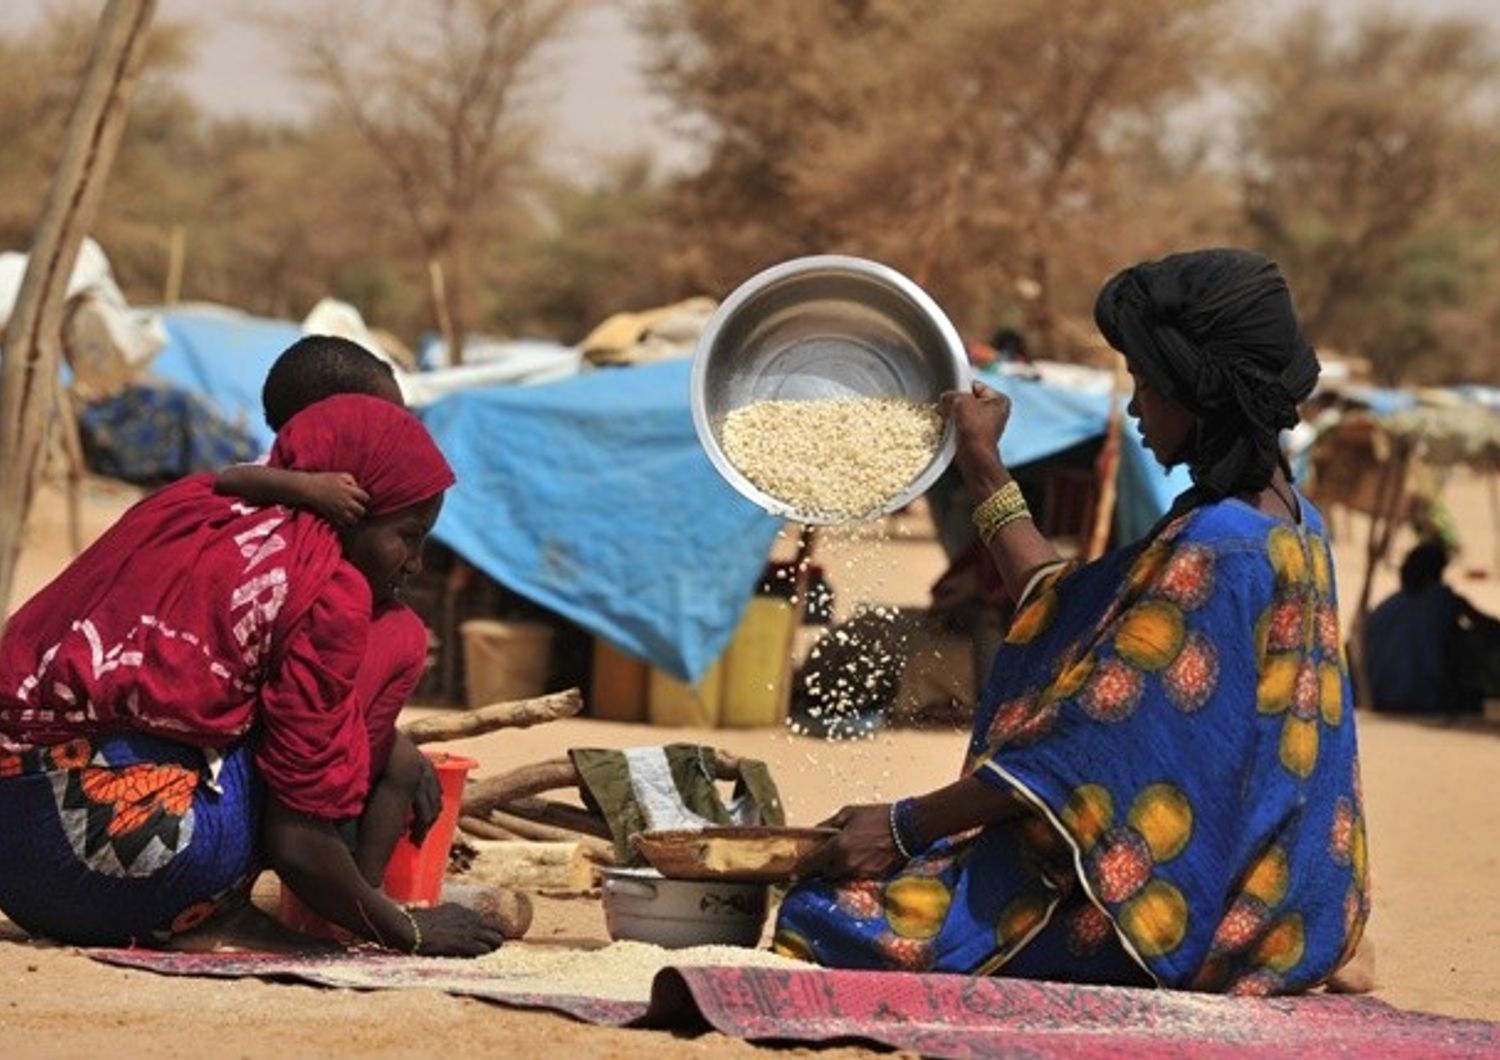 &nbsp;Nigeria &nbsp;assistenza alimentare a Niamey zona Lago Ciad violenze Boko Haram - afp